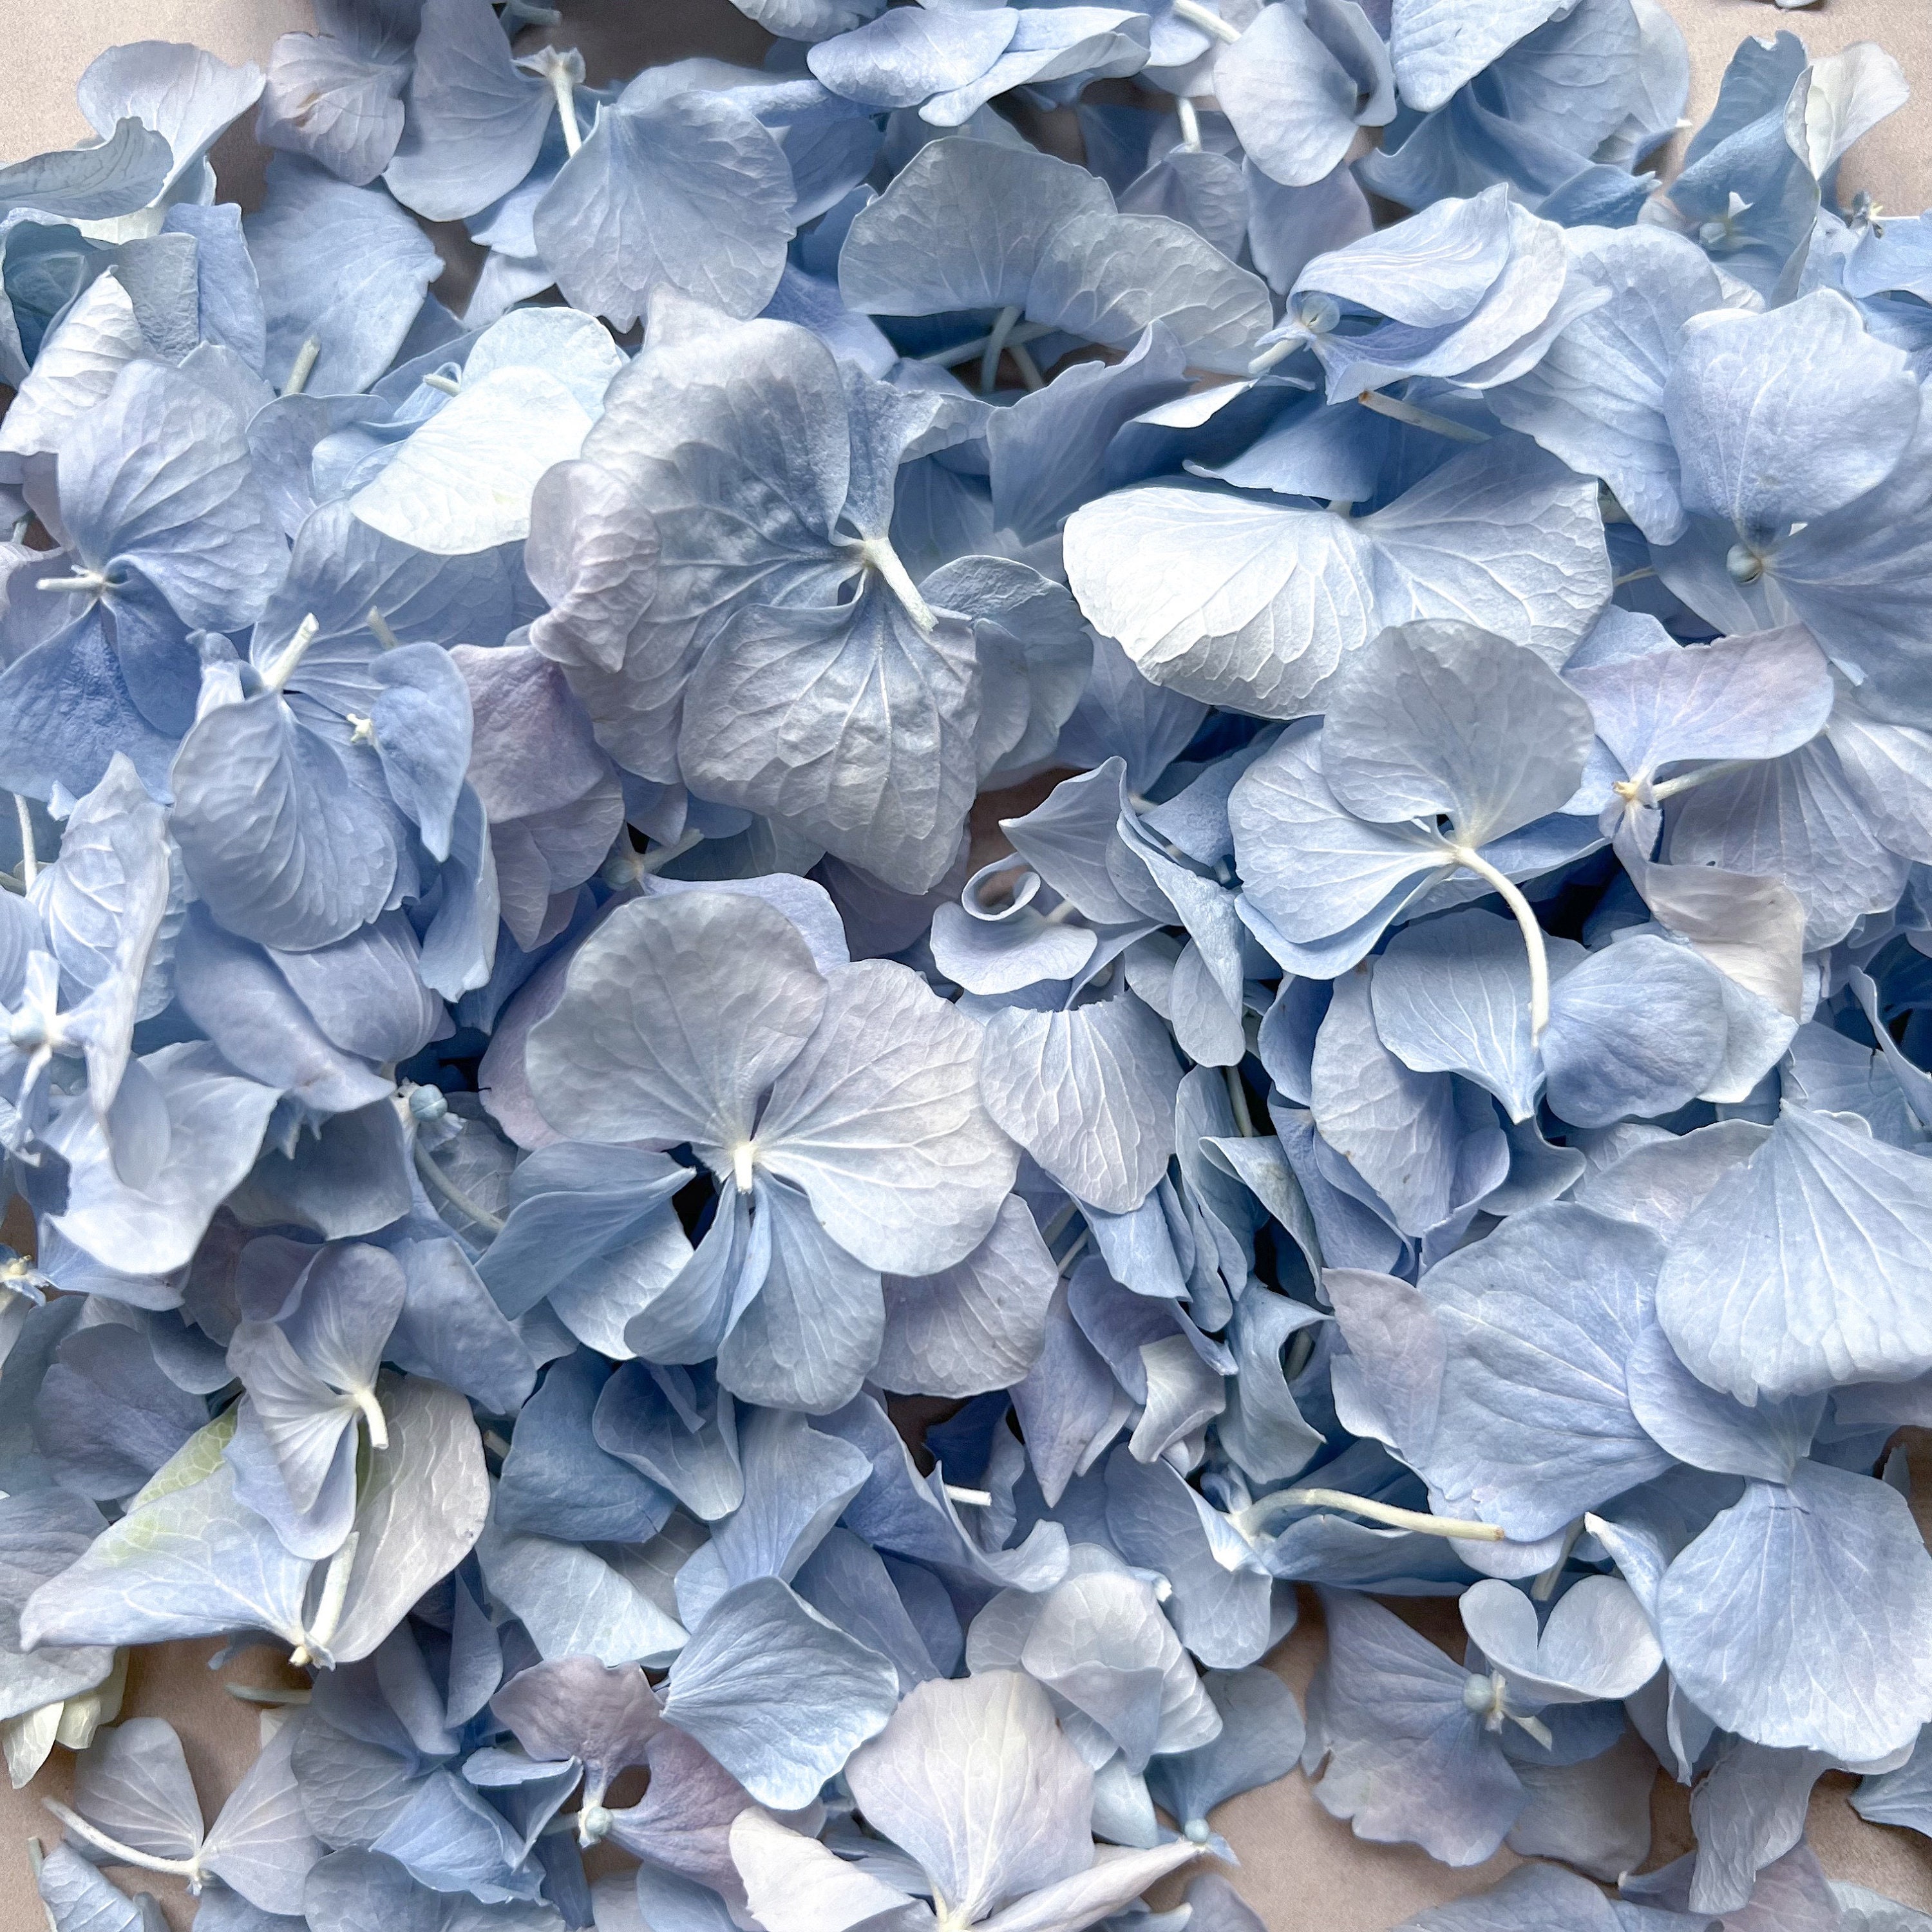 Eco Biodegradable Dried Flower Confetti, Botanical Petals Wedding